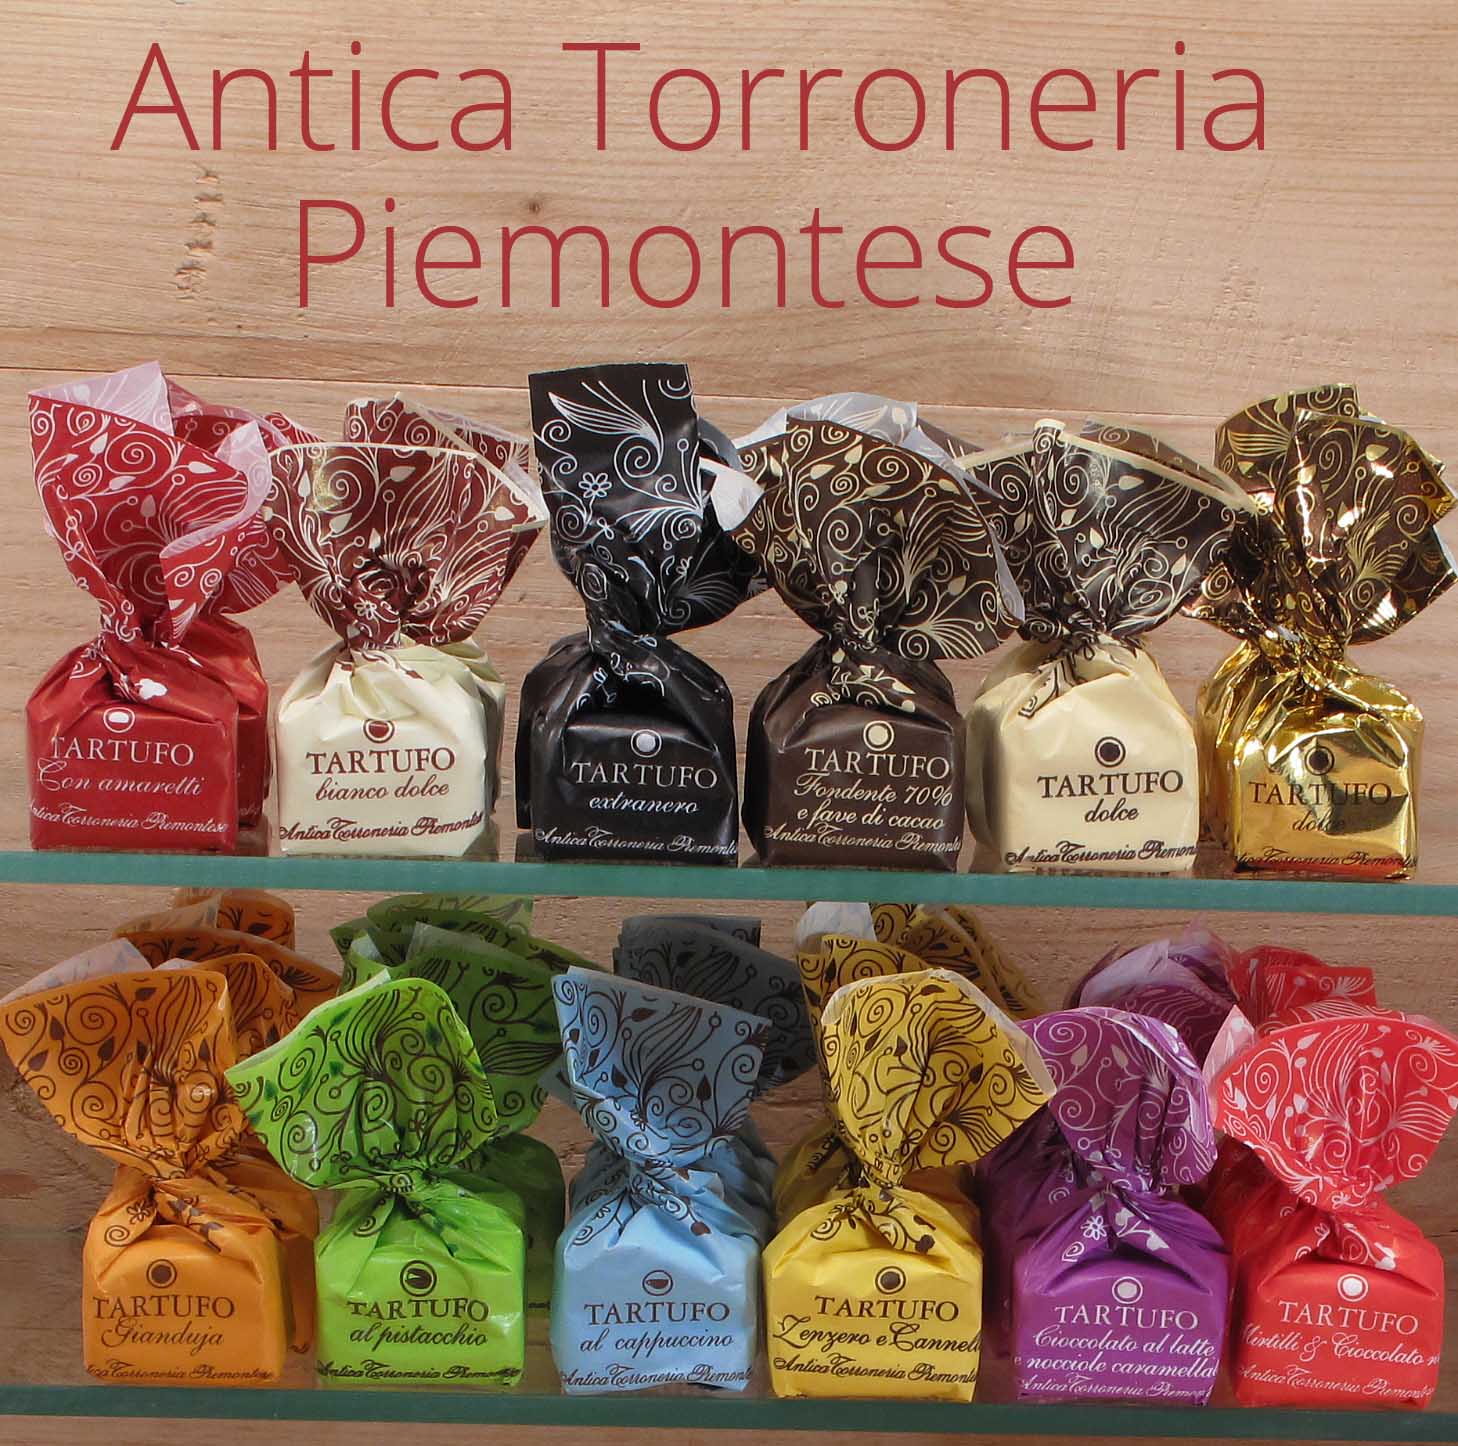 Antica-Torroneria-Piemontese-Summerfeelings-Kopie